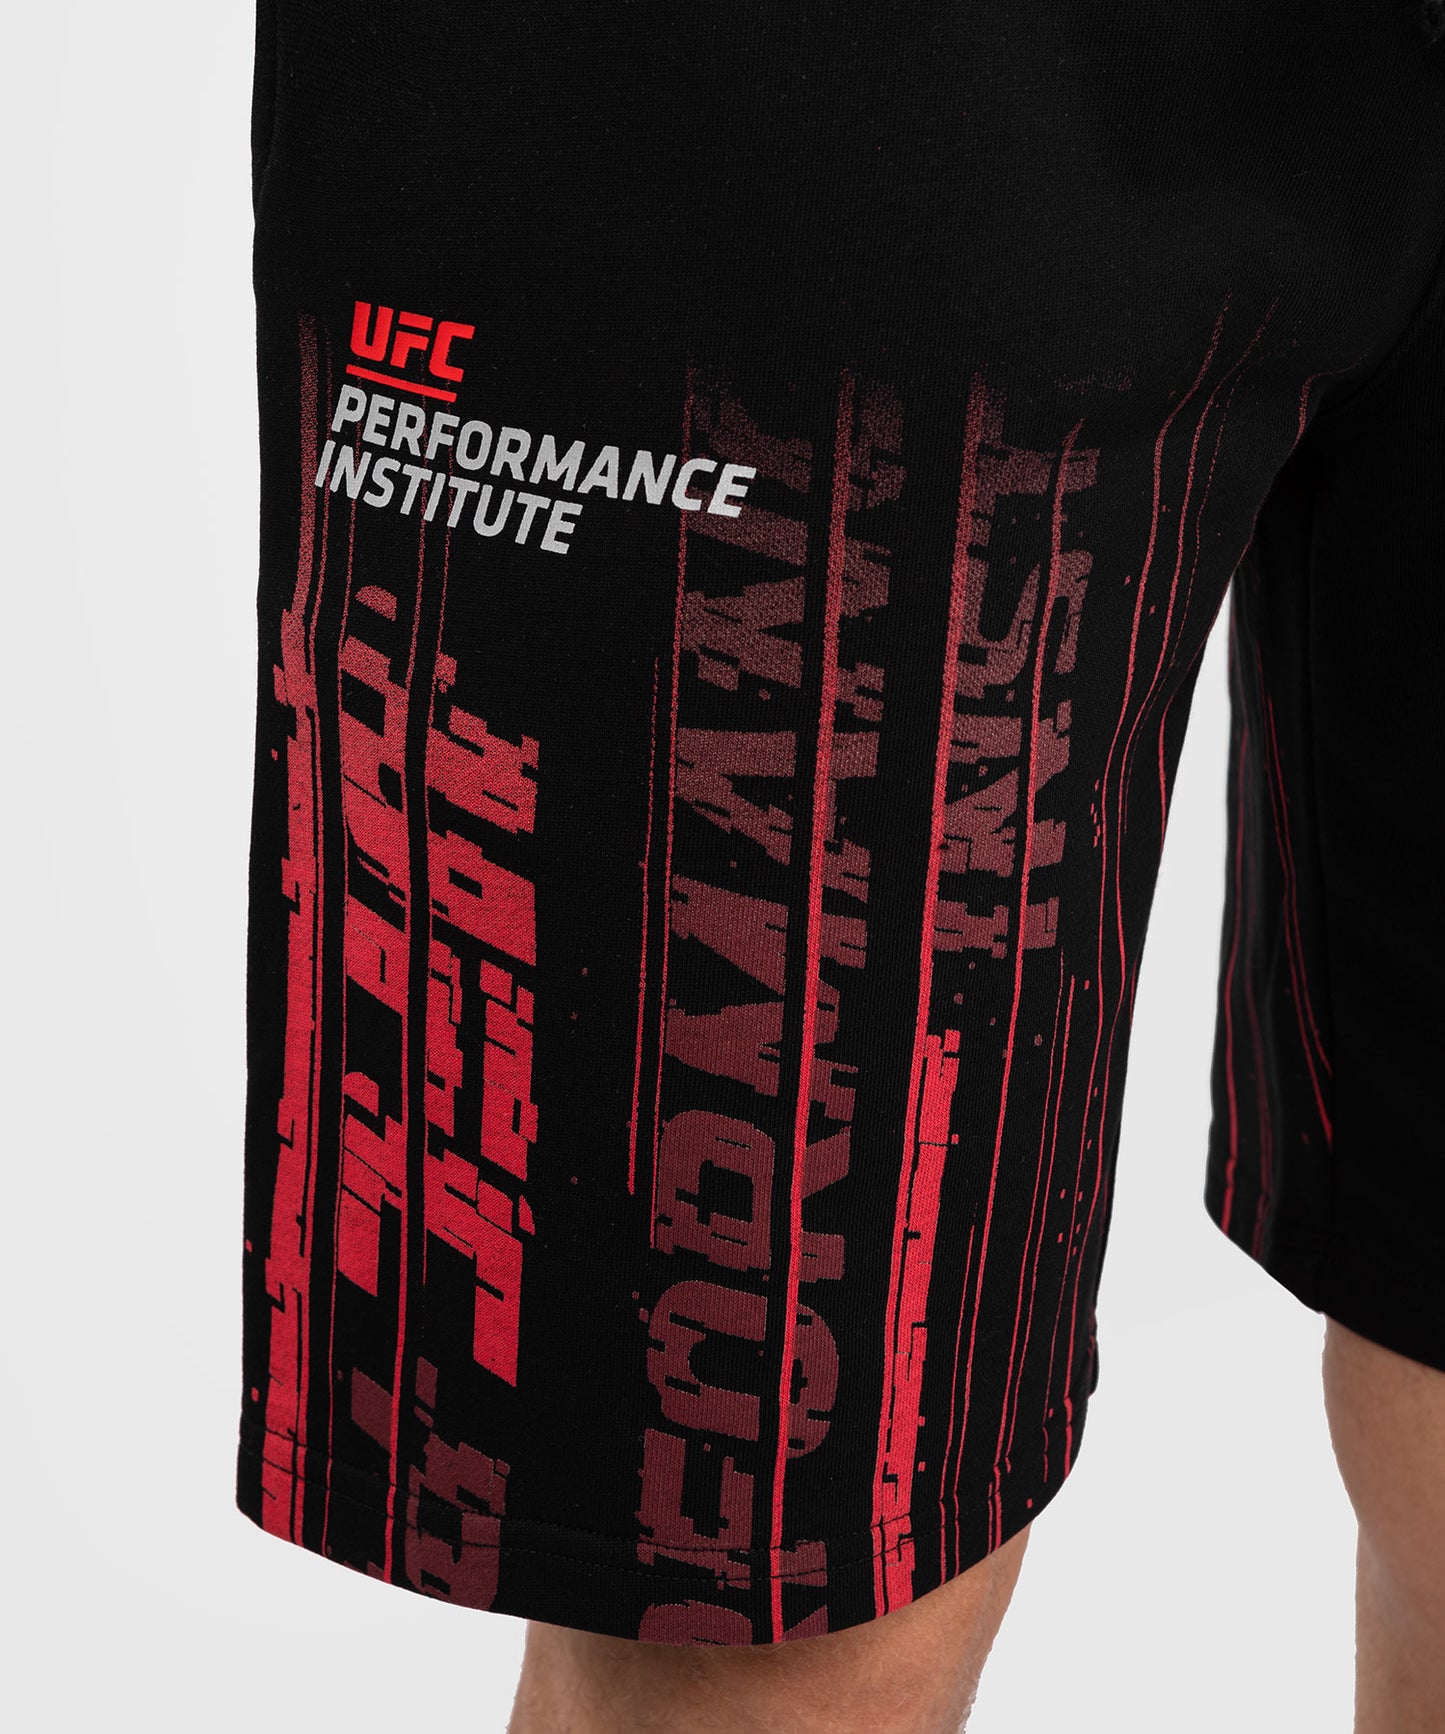 UFC Venum Performance Institute 2.0 Pantalón Corto de Algodón para Hombre - Negro/Rojo